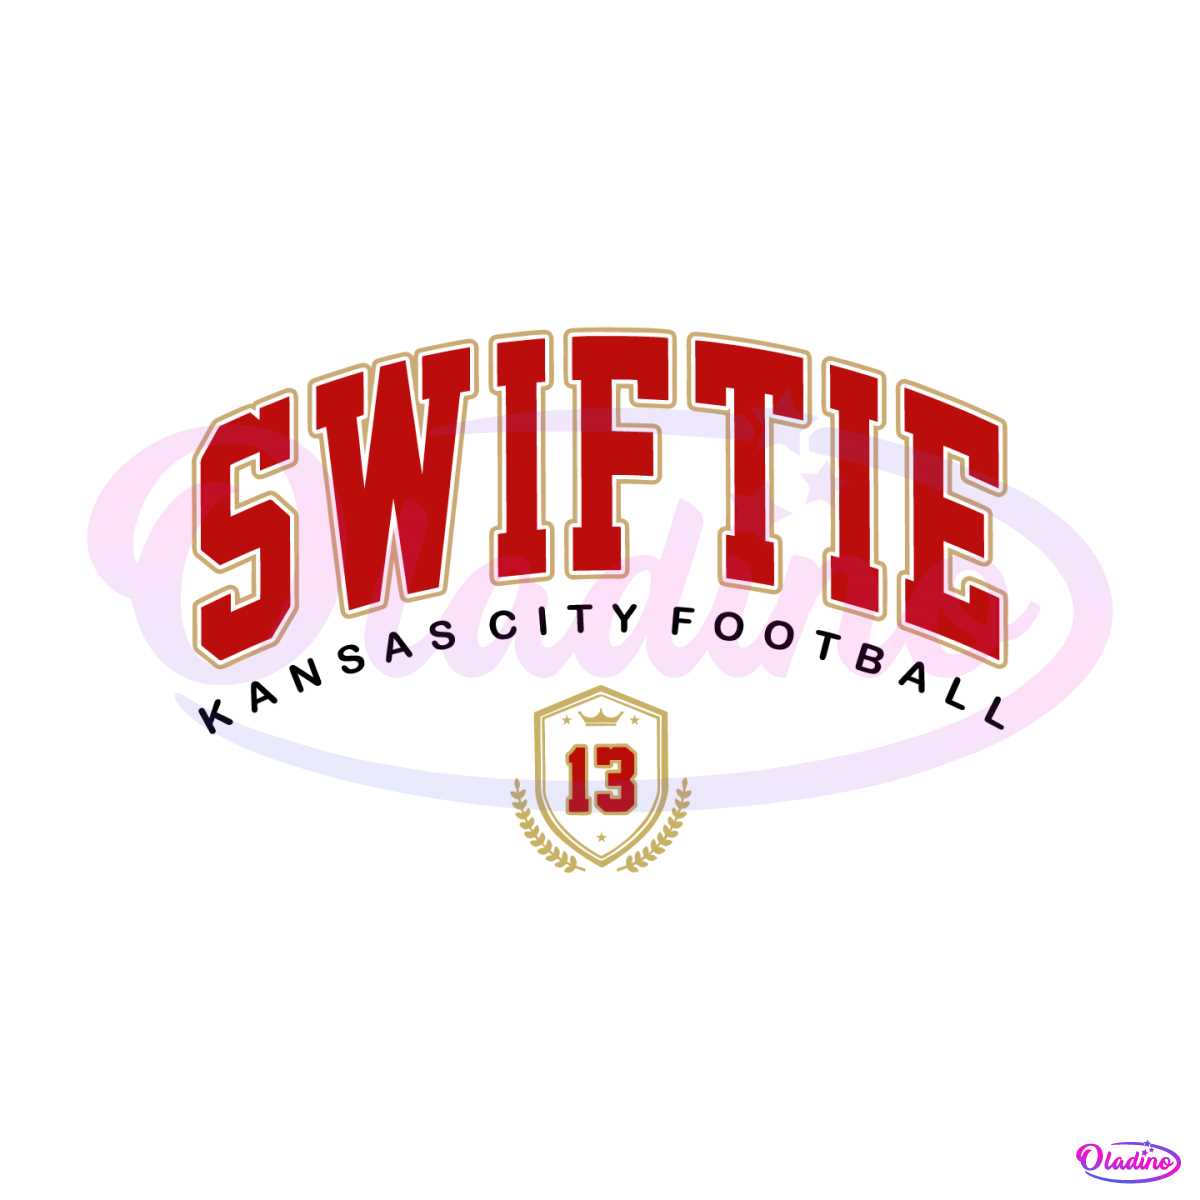 swiftie-kansas-city-football-swift-and-kelce-svg